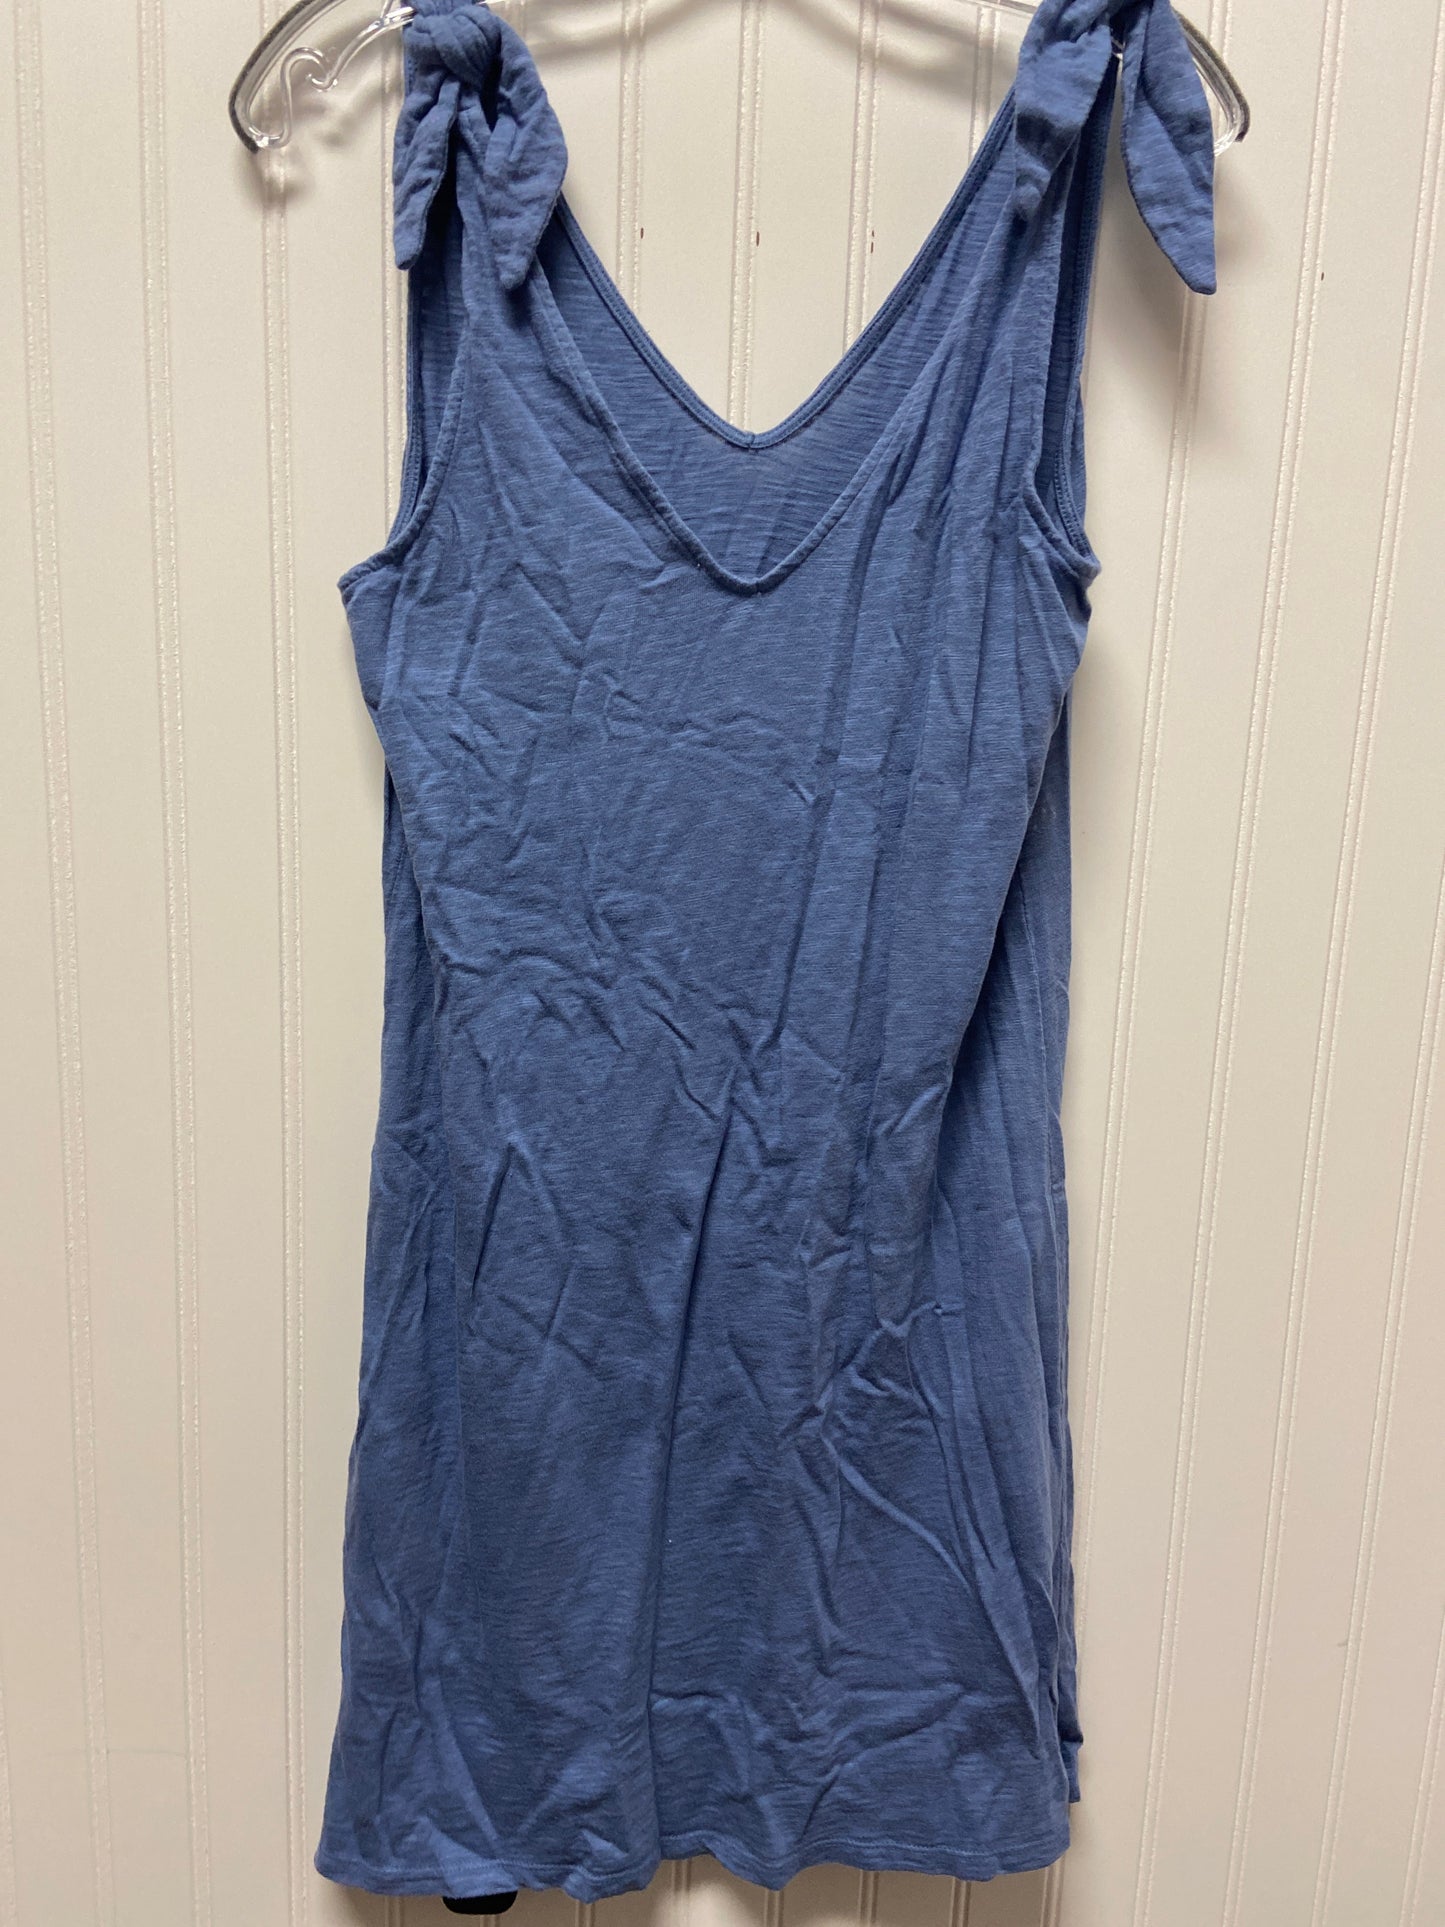 Blue Dress Casual Short Lucky Brand, Size S